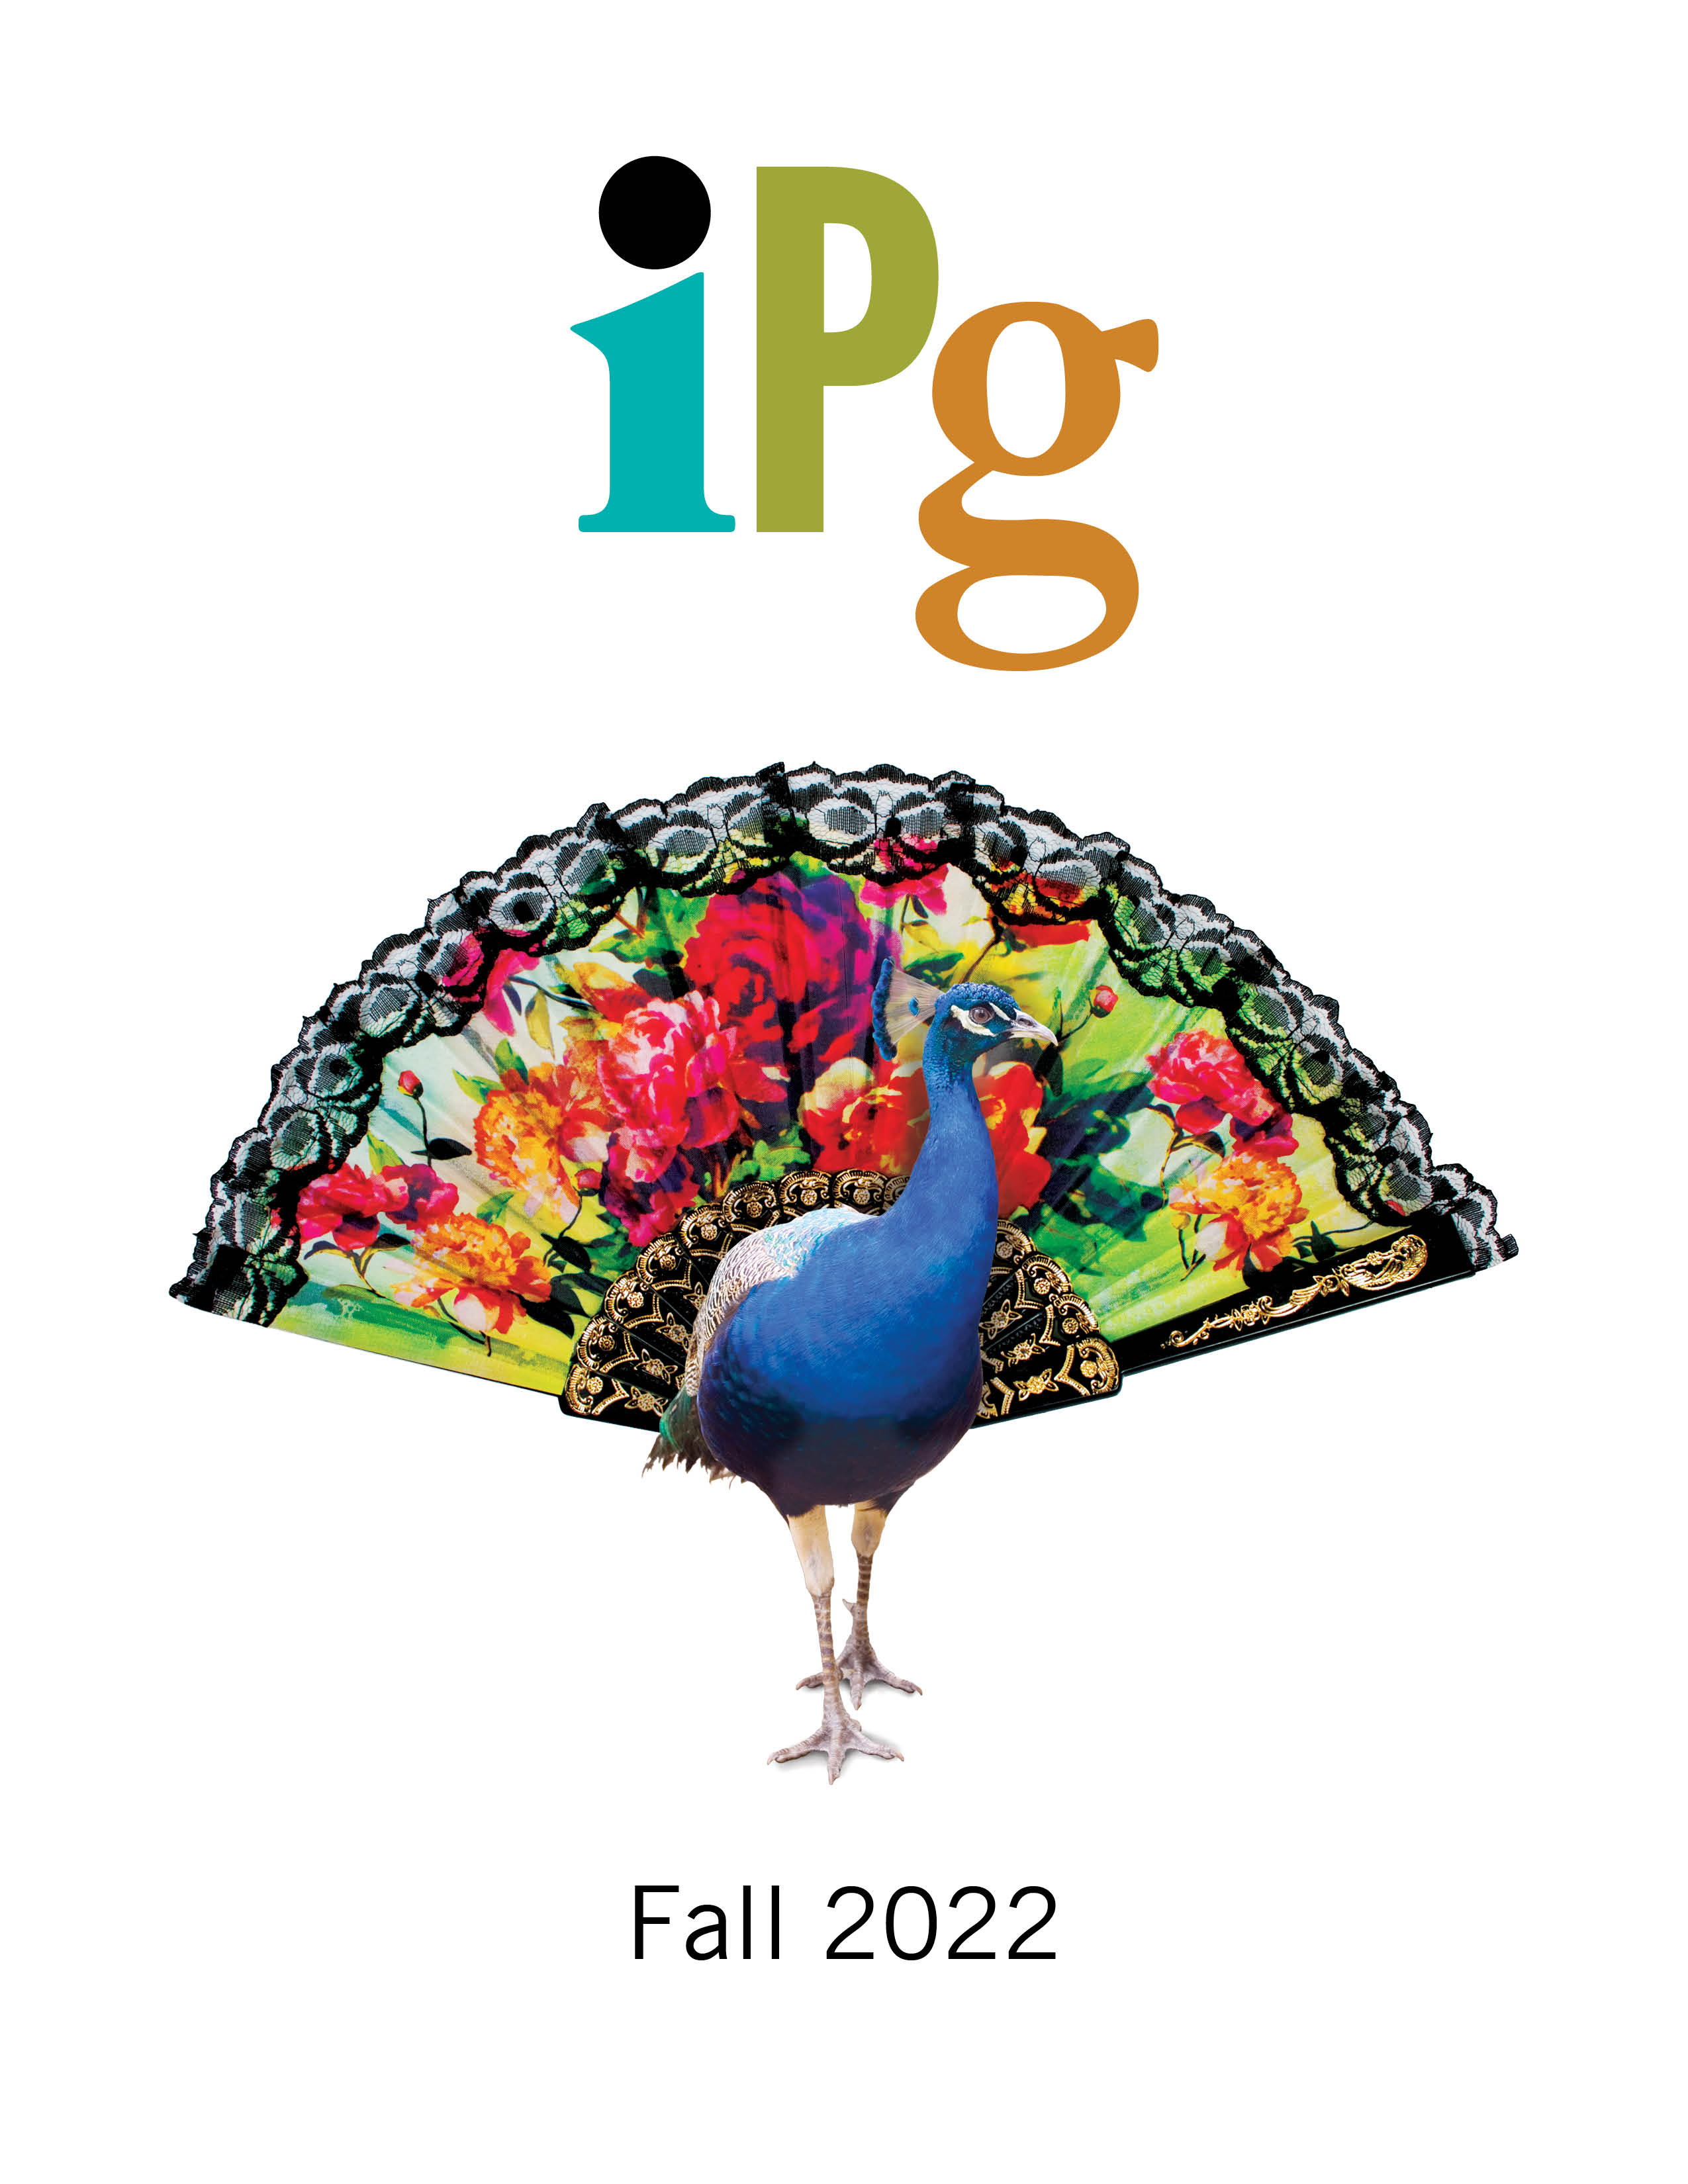 IPG General Trade Catalog